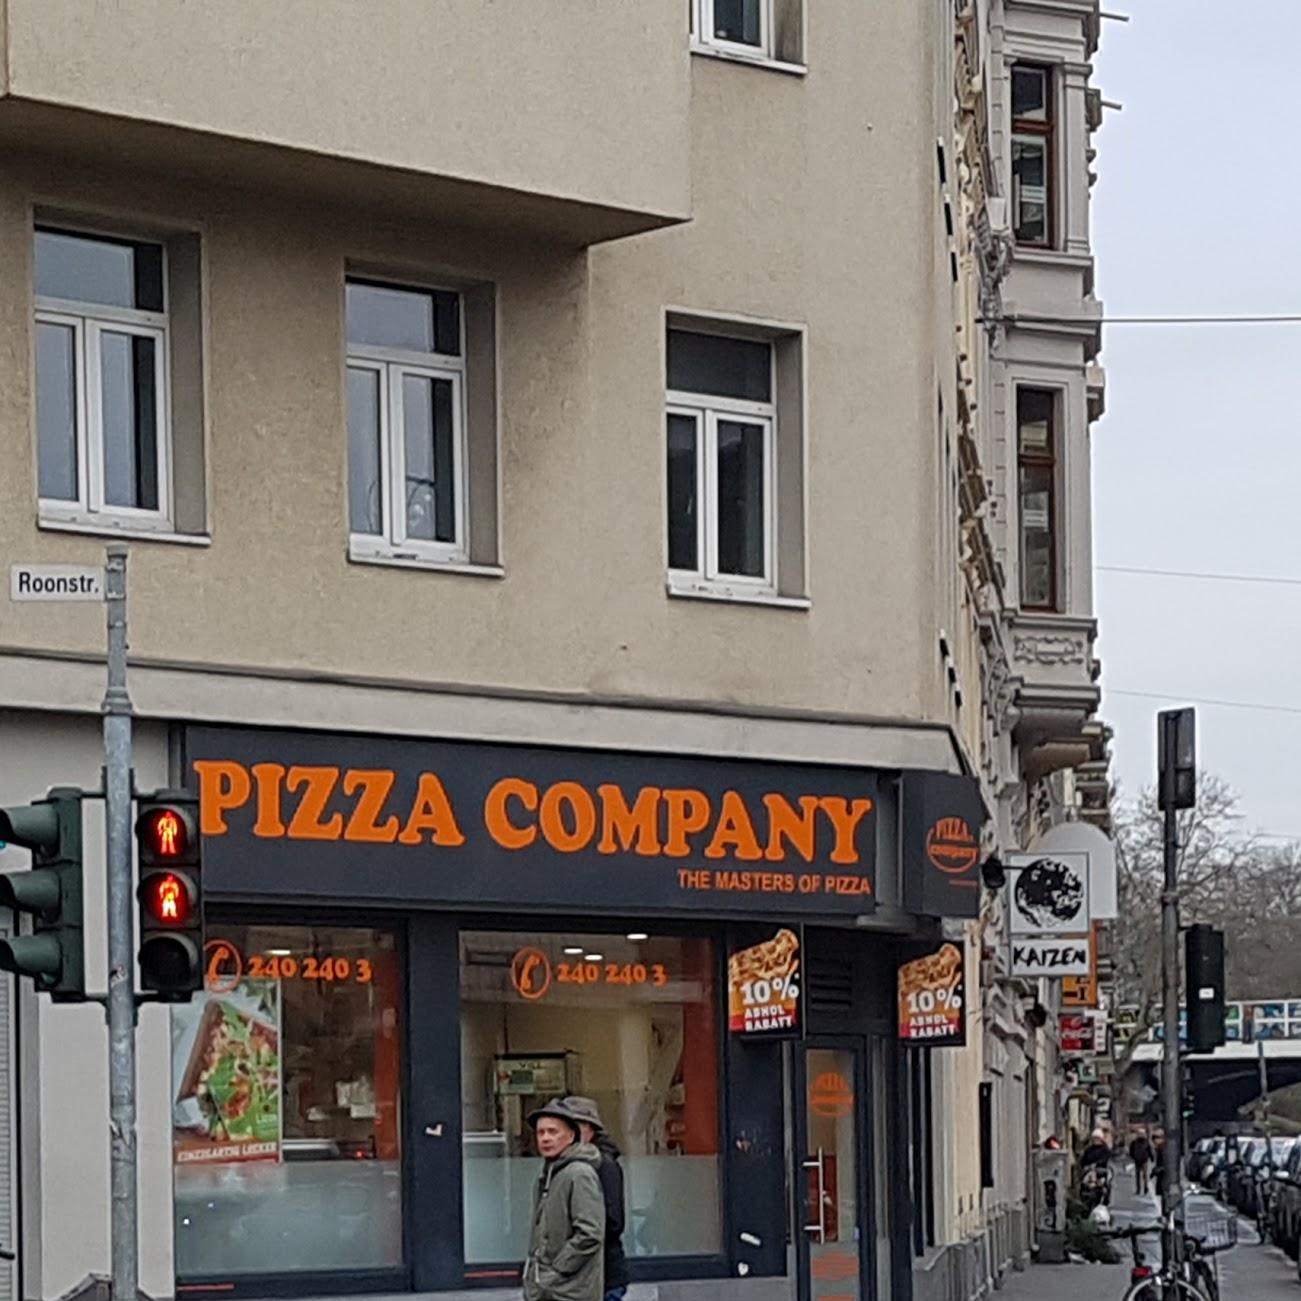 Restaurant "The Pizza Company" in Köln